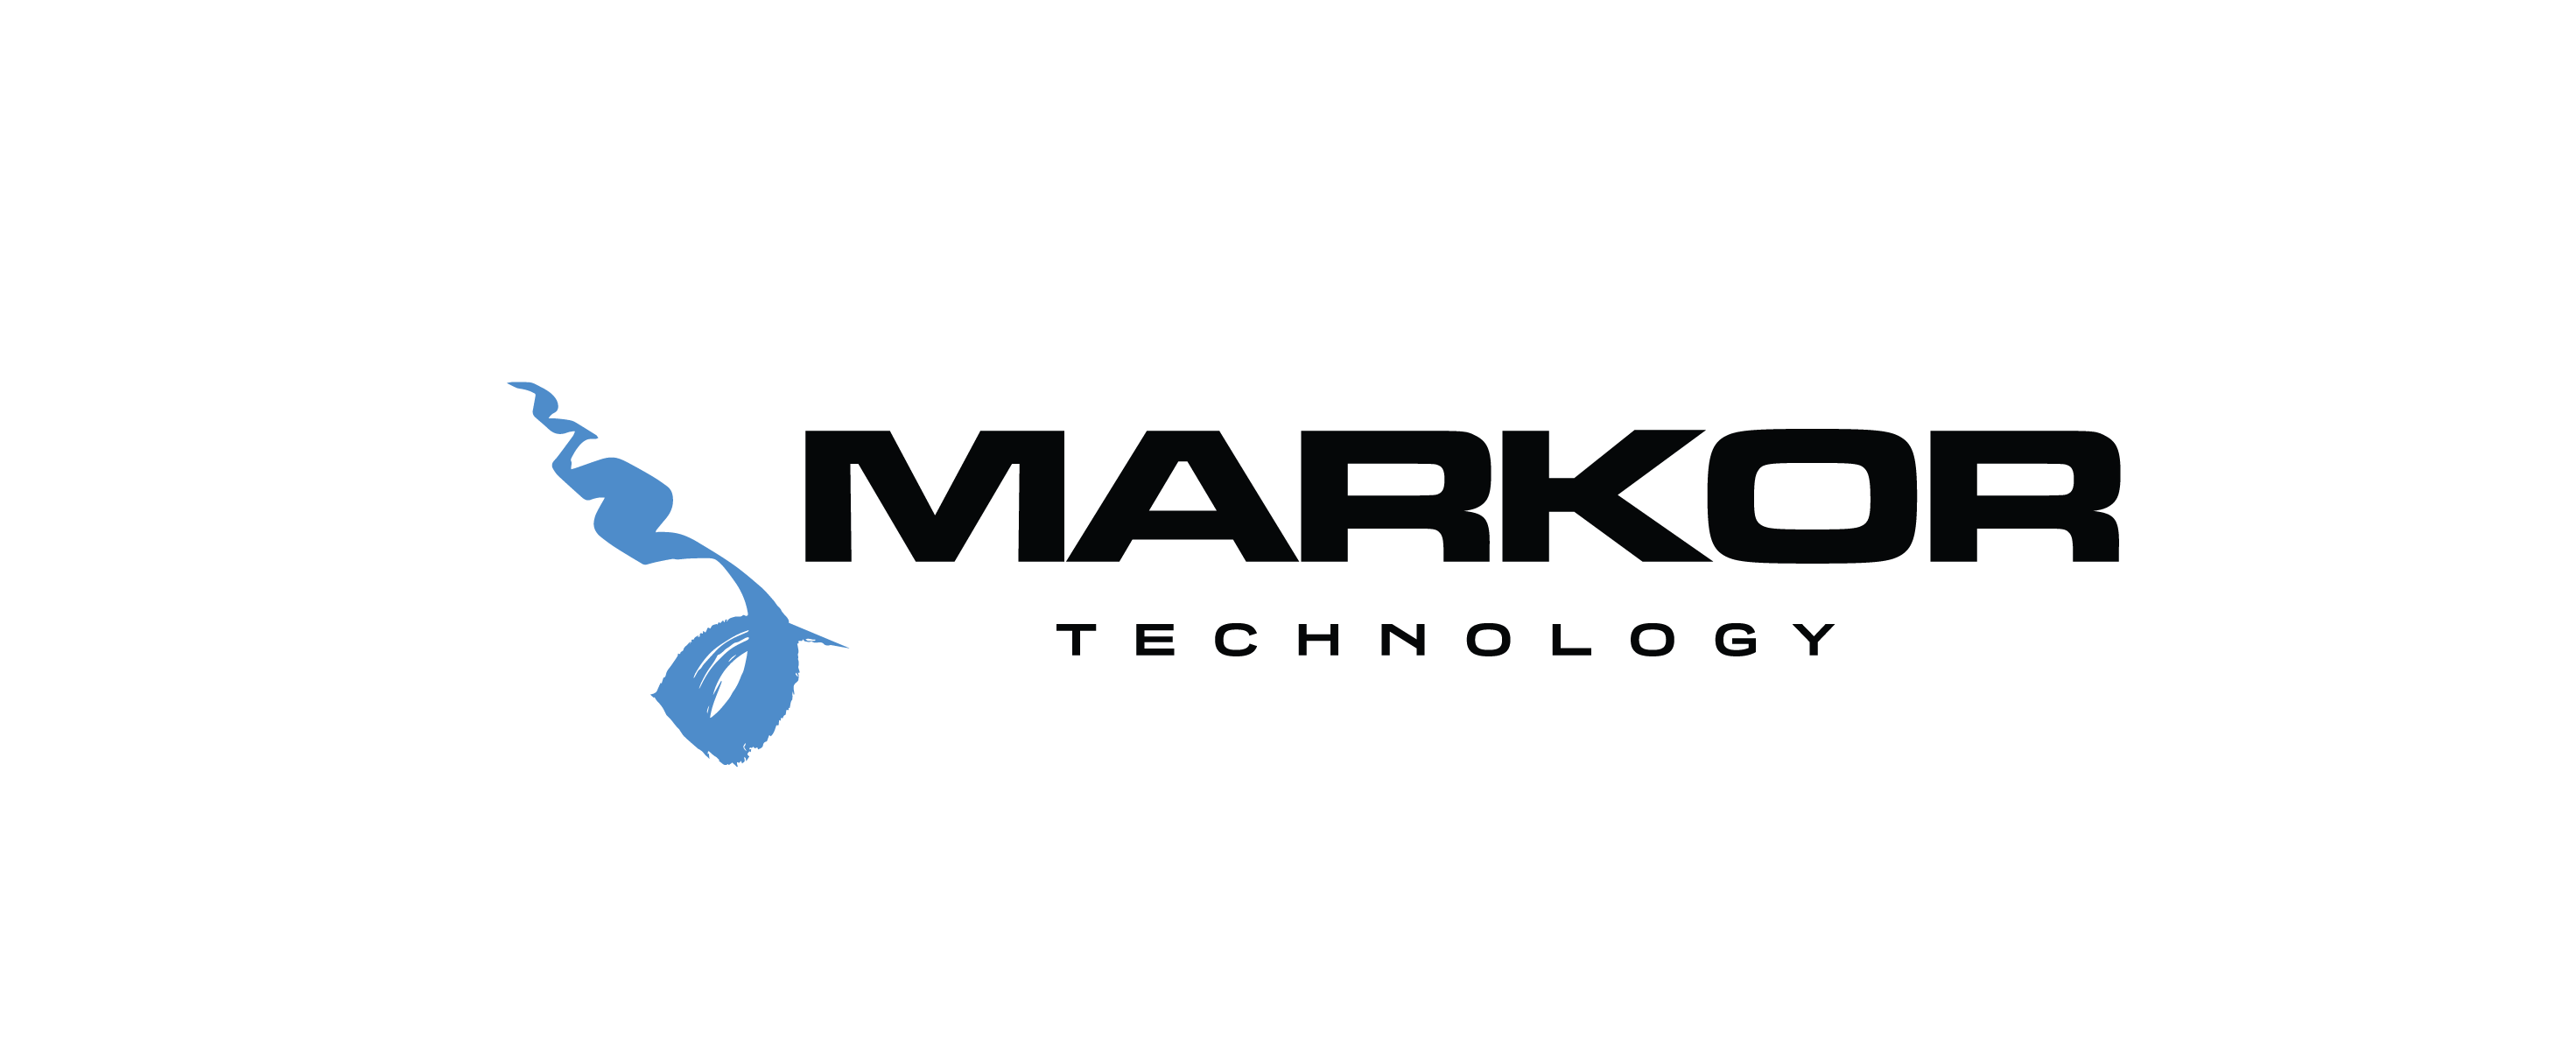 Markor Technology ゲーム